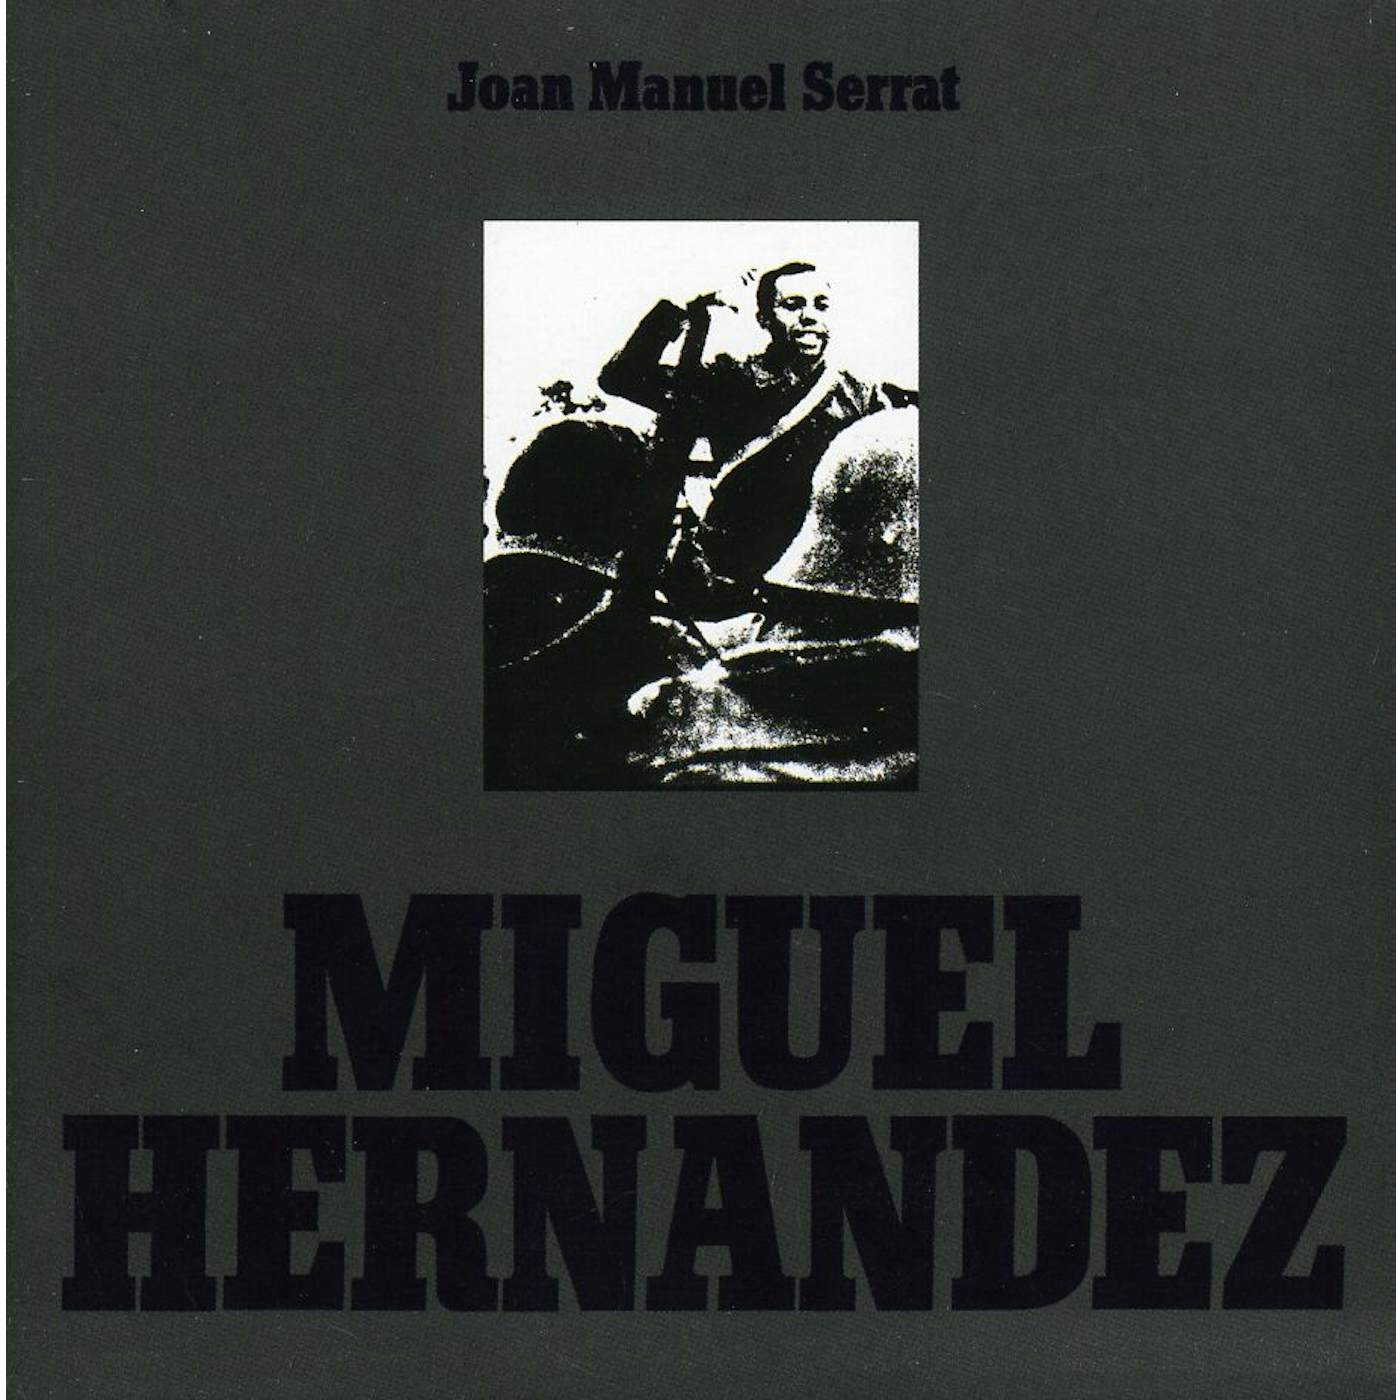 Joan Manuel Serrat MIGUEL HERNANDEZ CD